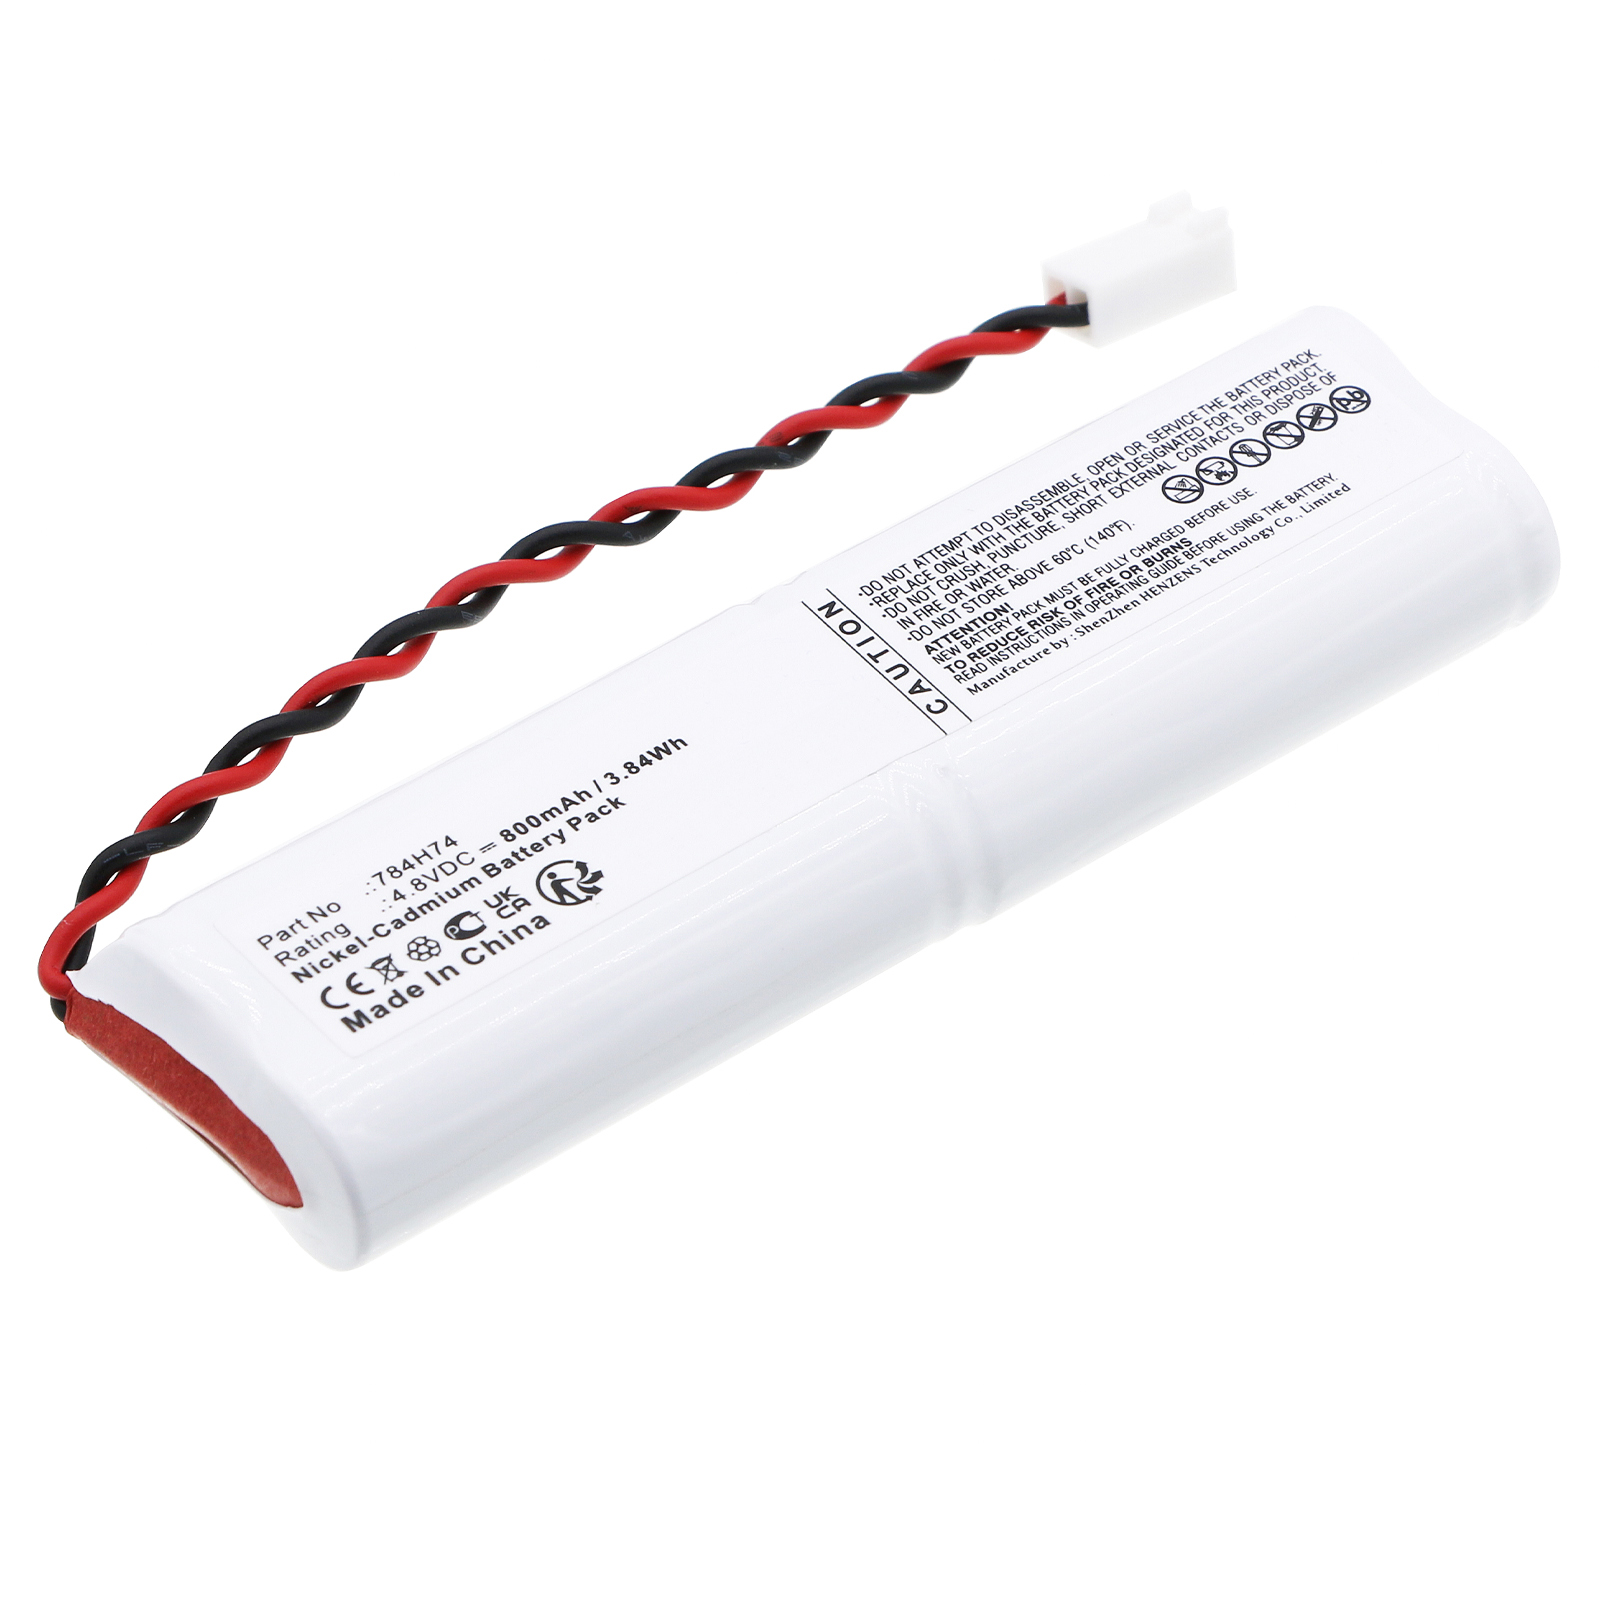 Synergy Digital Emergency Lighting Battery, Compatible with DUAL-LITE 784H74 Emergency Lighting Battery (Ni-CD, 4.8V, 800mAh)